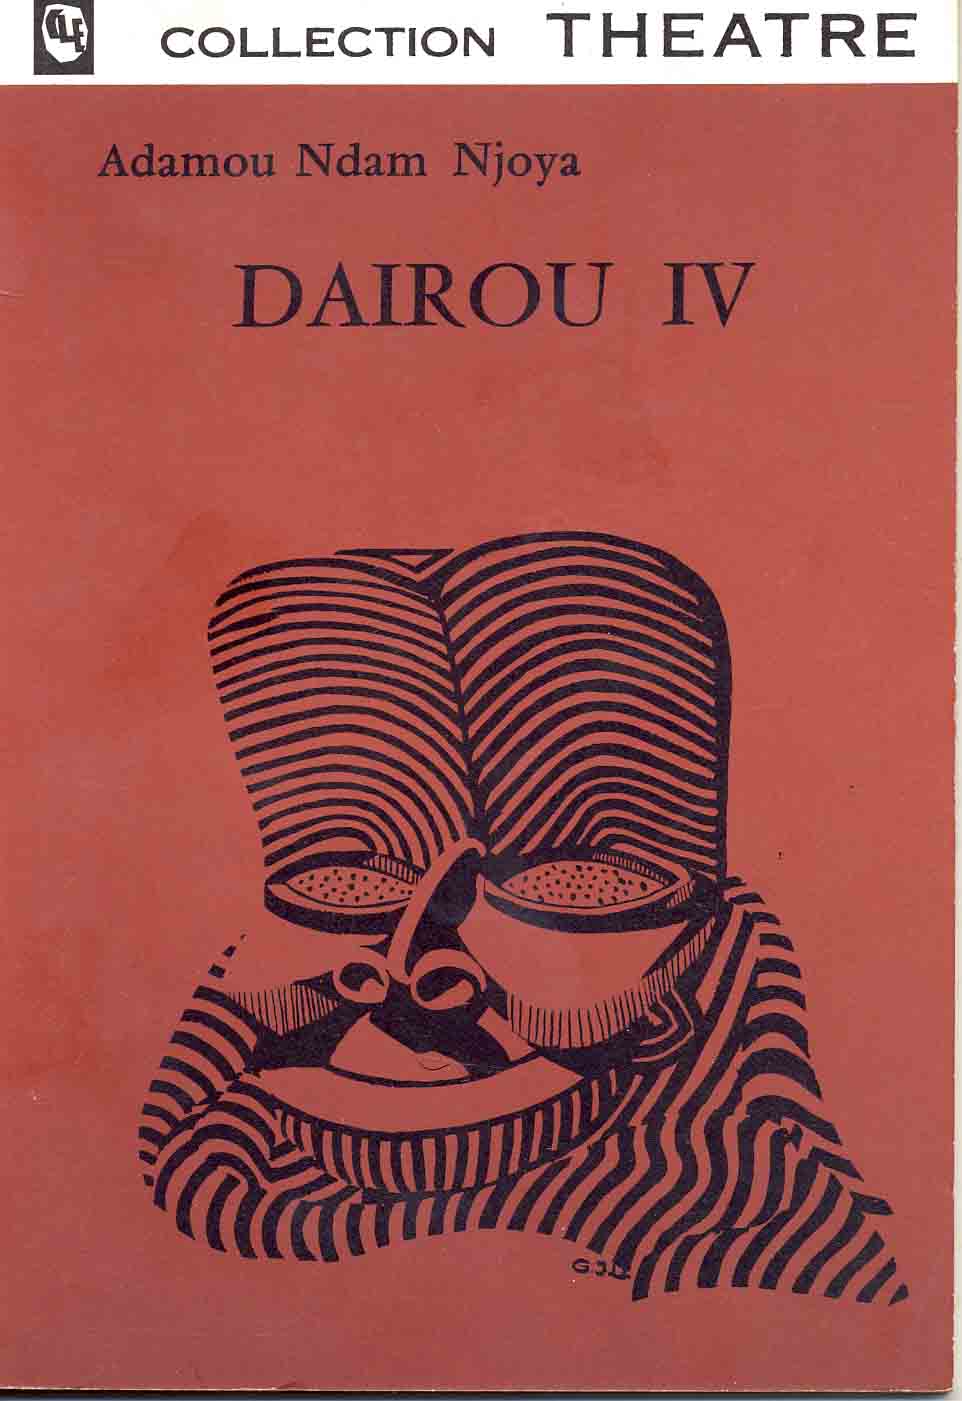 Dairou IV